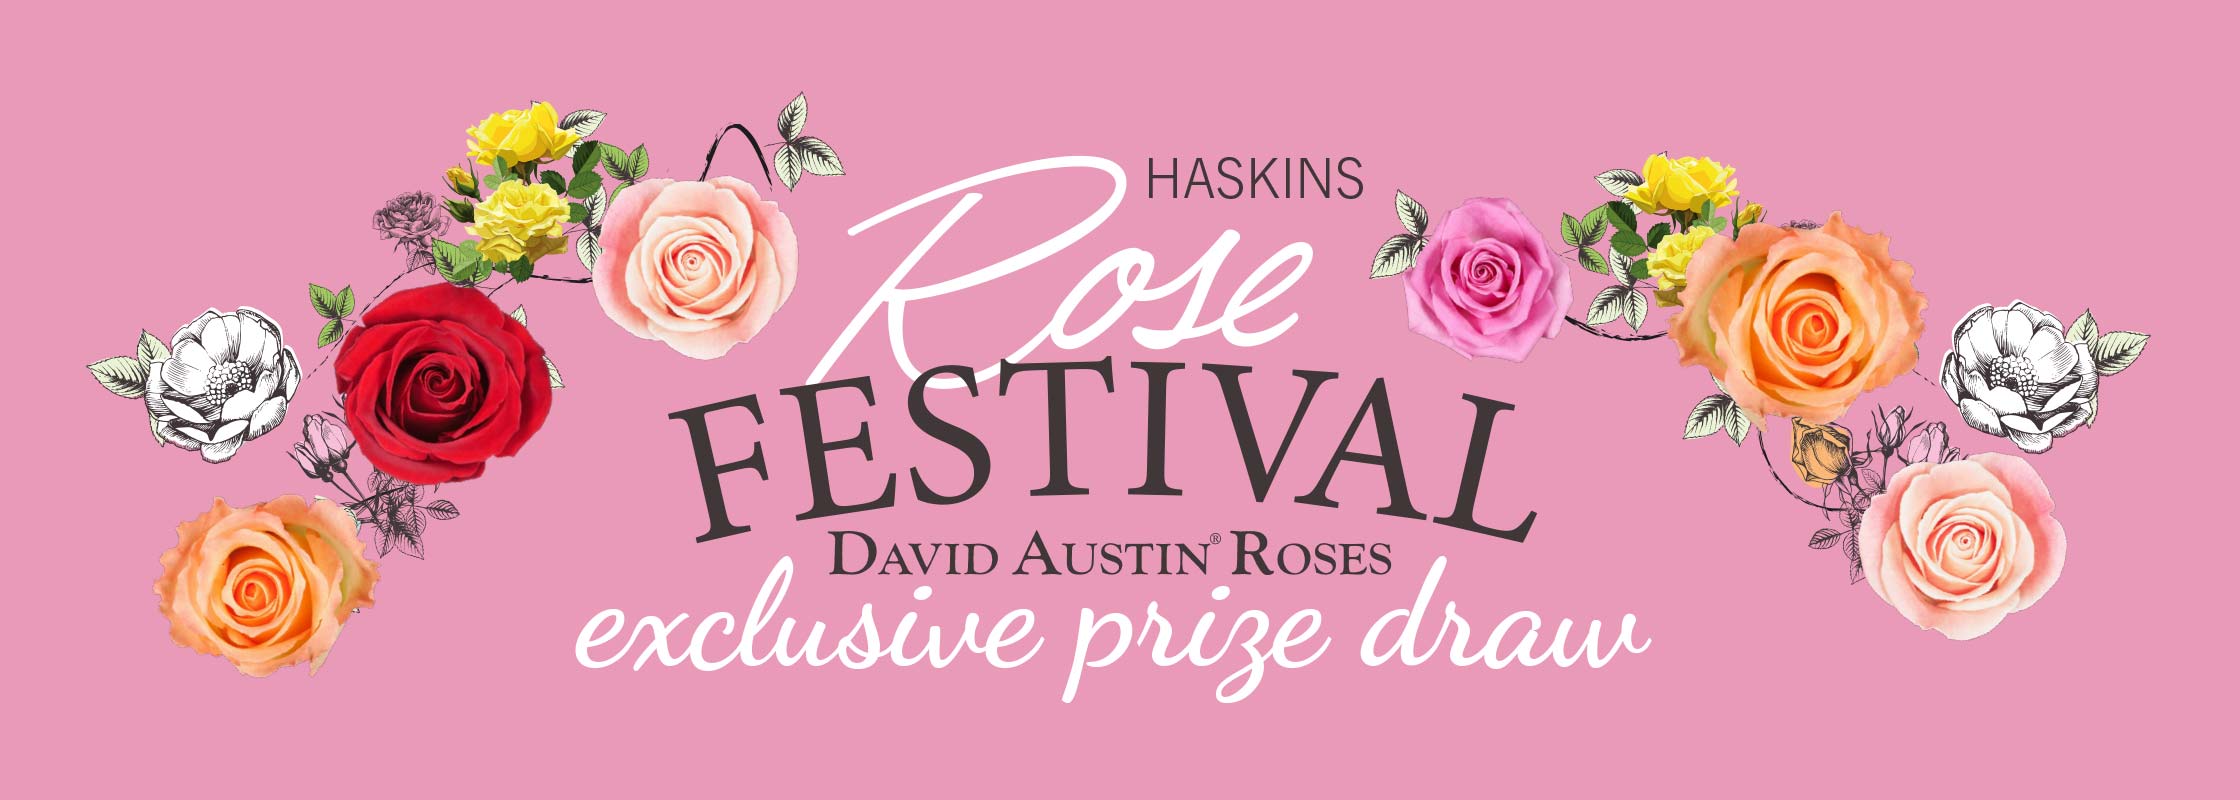 rose-festival-prize-draw-9587